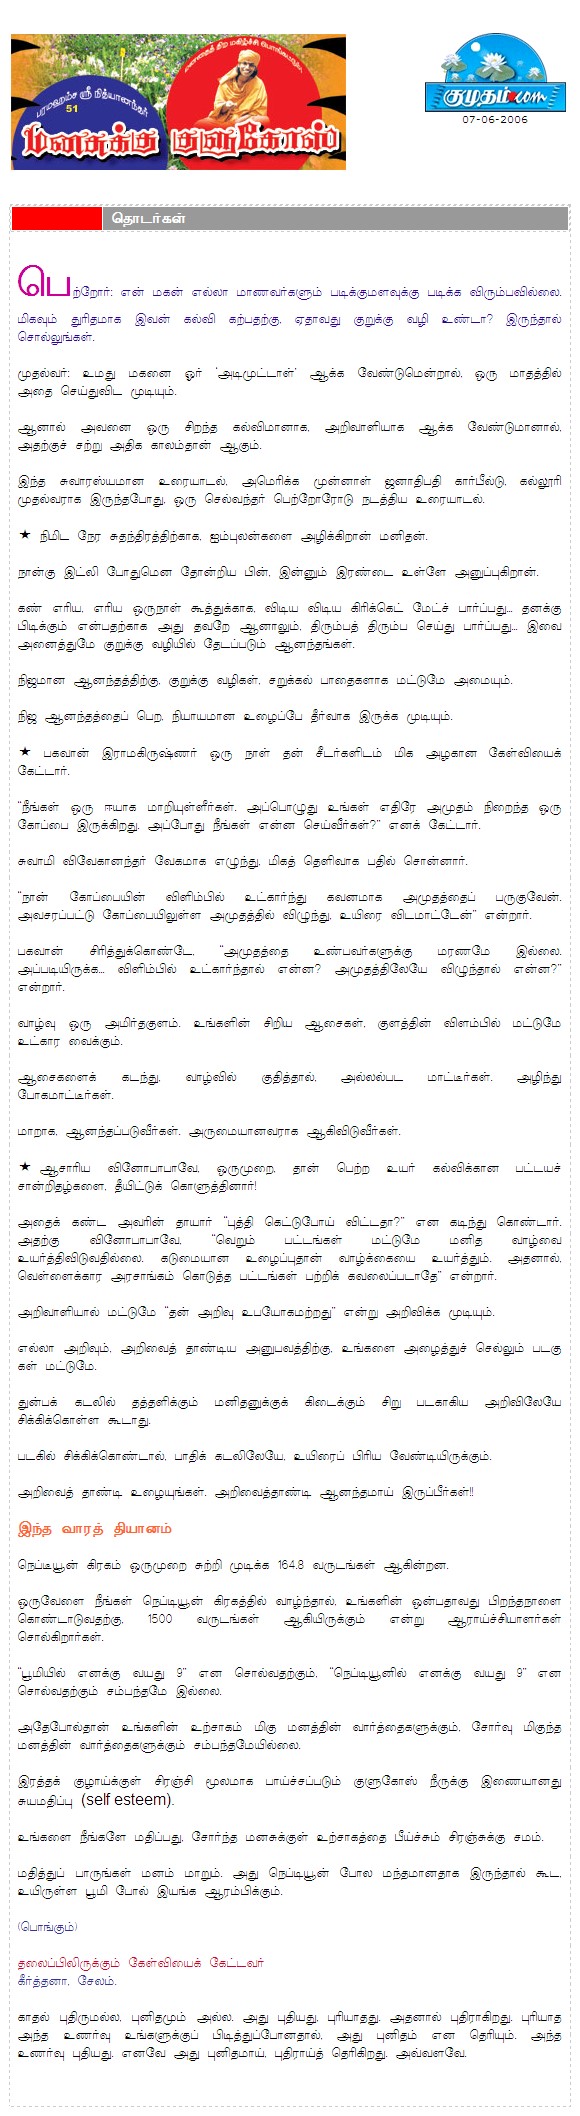 07 June 2006 Tamil.jpg